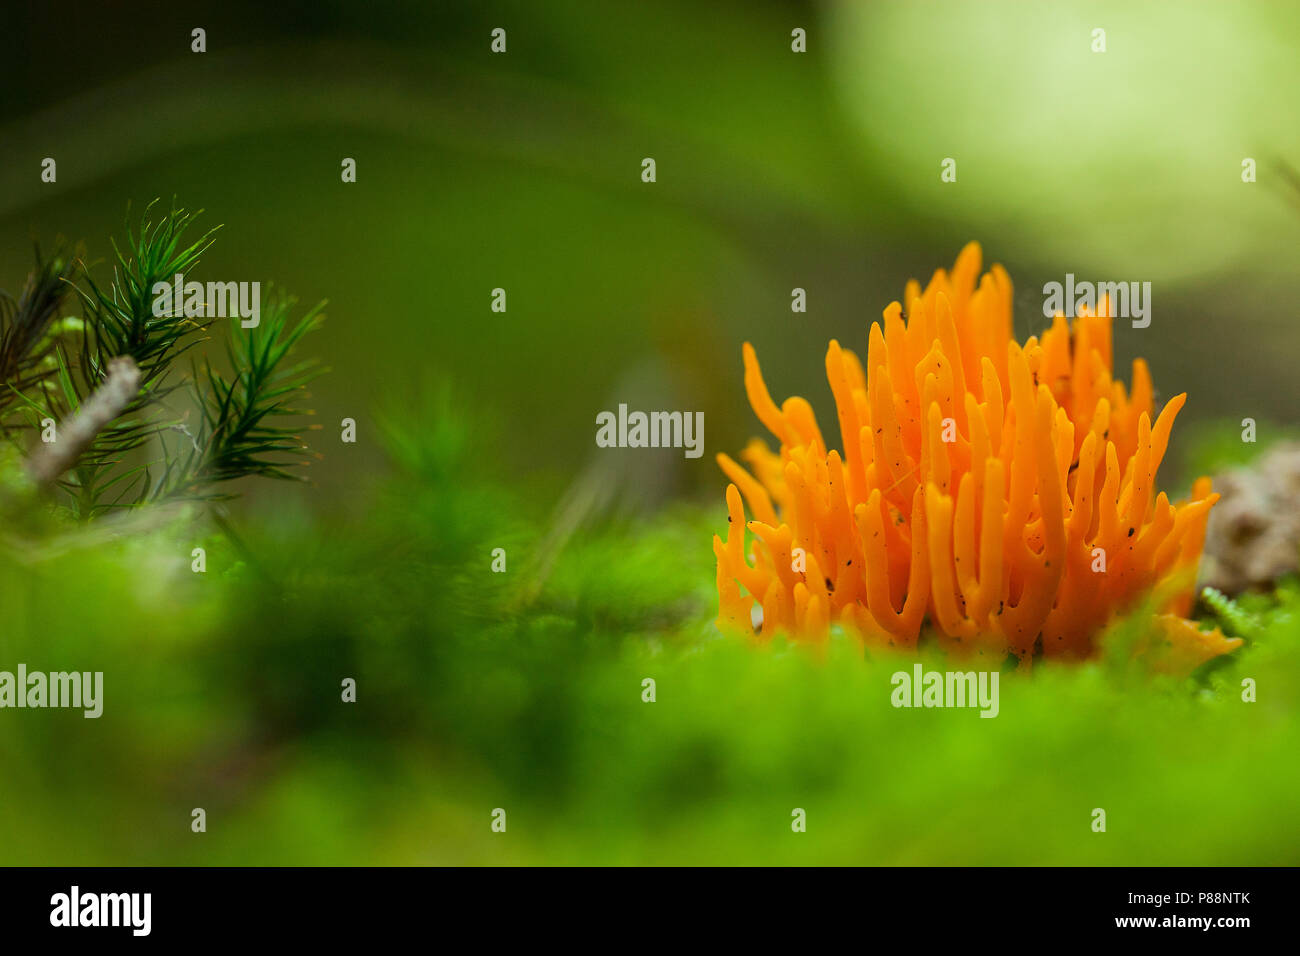 Kleverig koraalzwammetje; Giallo staghorn fungo Foto Stock